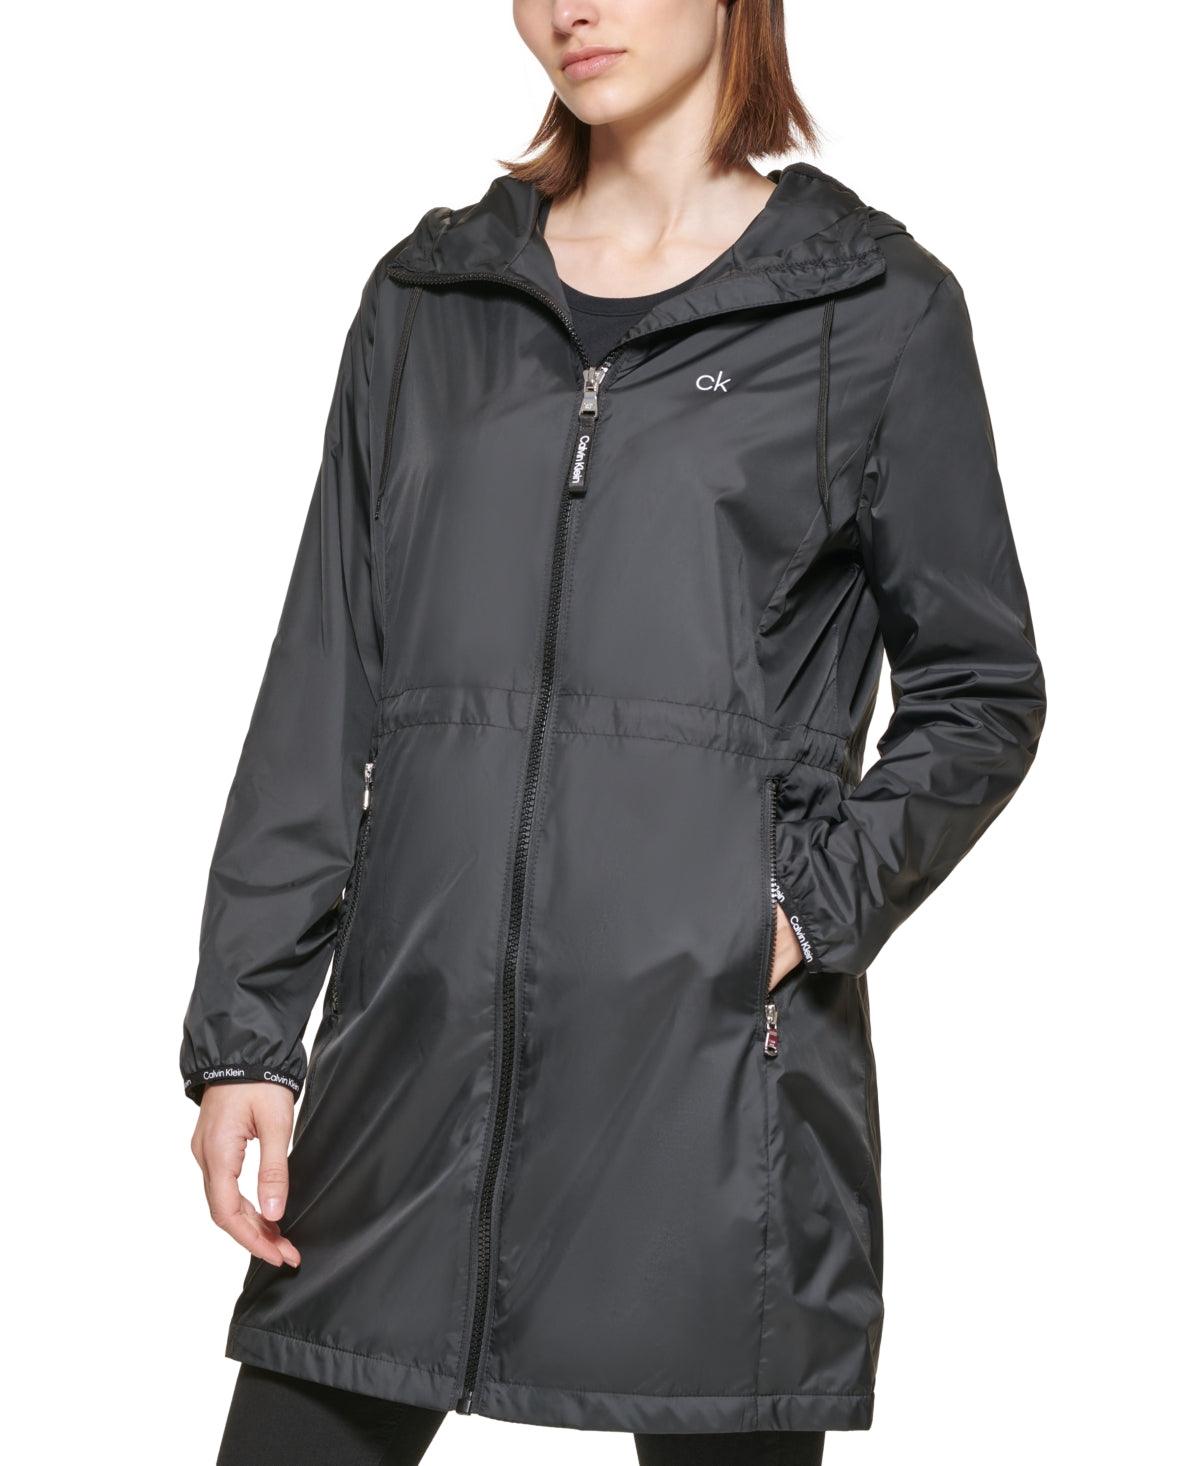 landinwaarts val Microprocessor Calvin Klein Women's Rain Coat Black petite Small PS Hooded Anorak –  Bristol Apparel Co